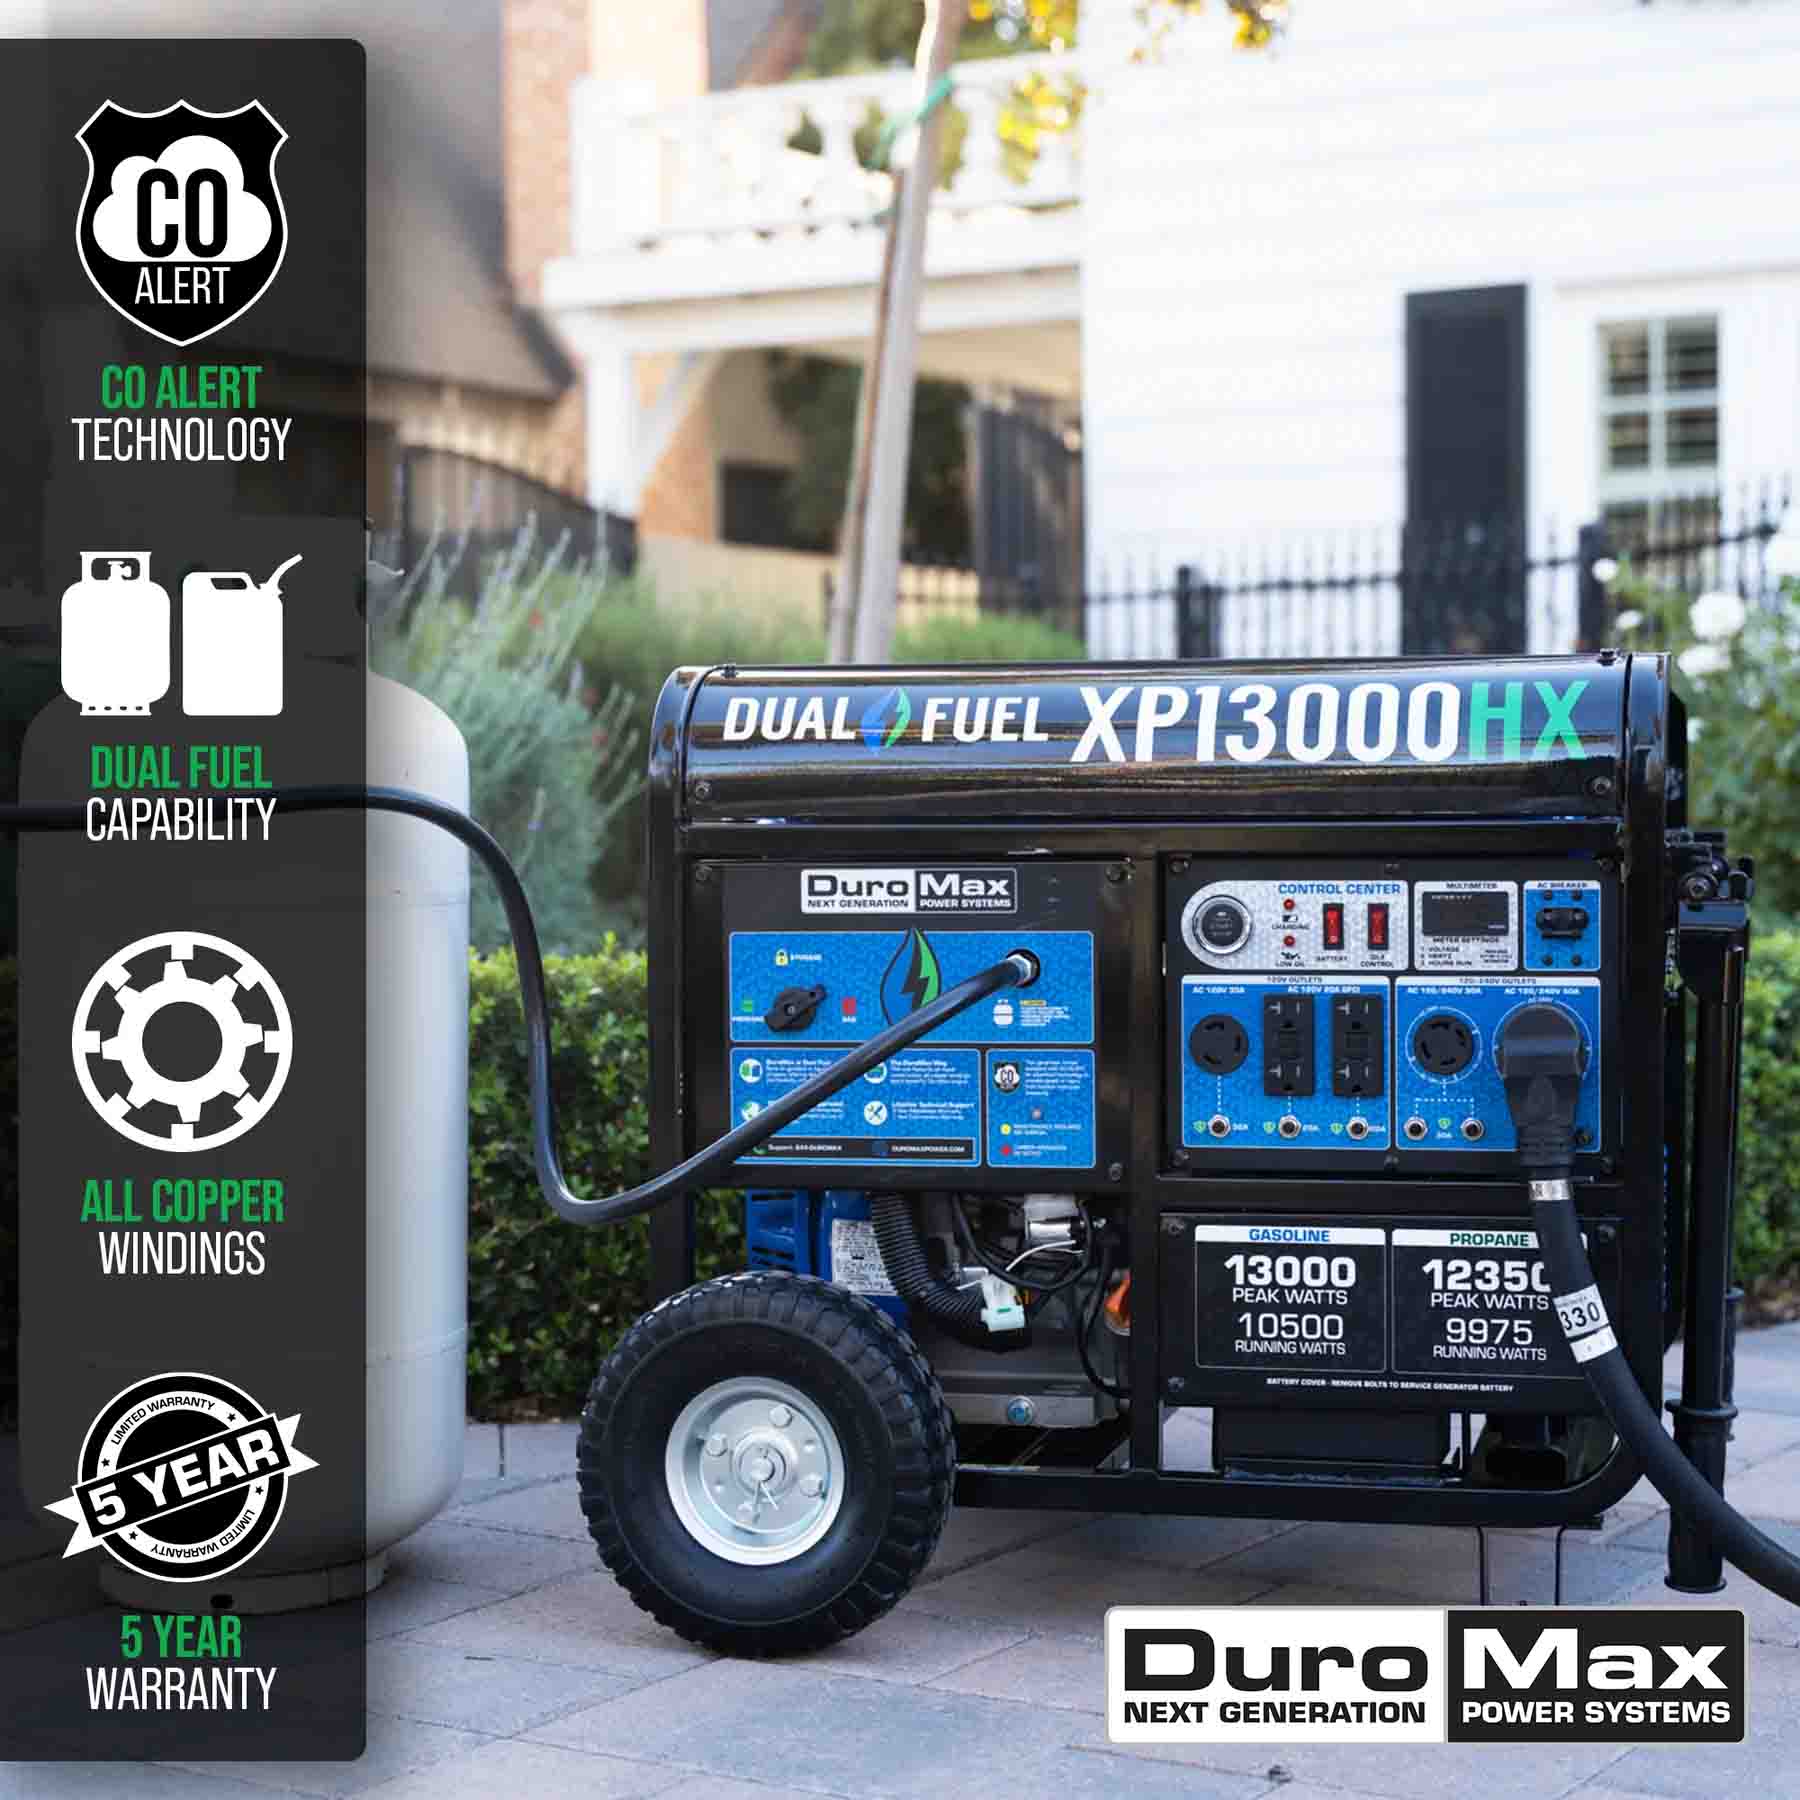 DuroMax XP13000HX Dual Fuel Portable Generator Features